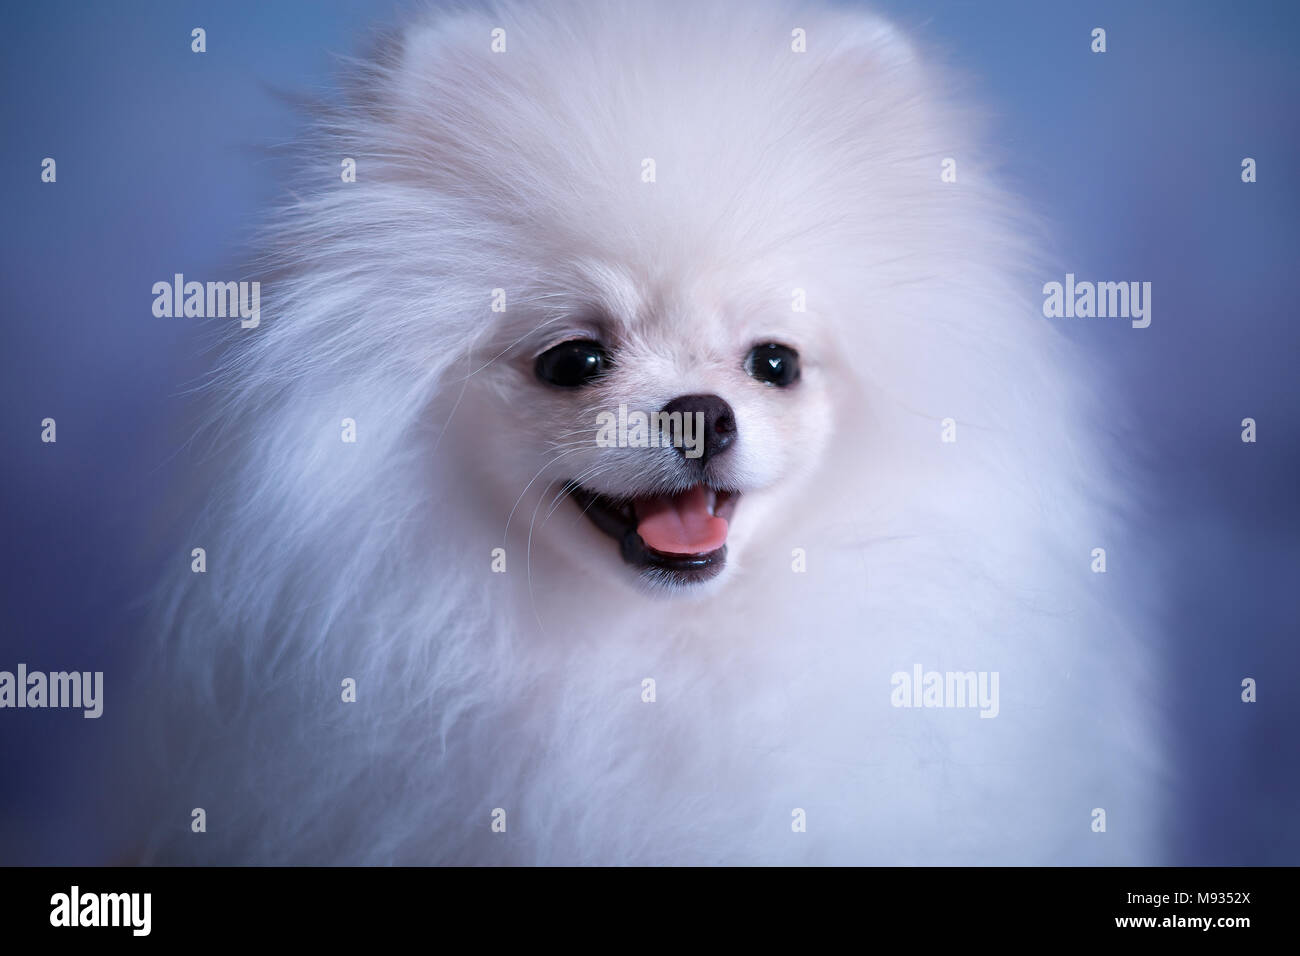 Cute White fluffy puppy Stock Photo